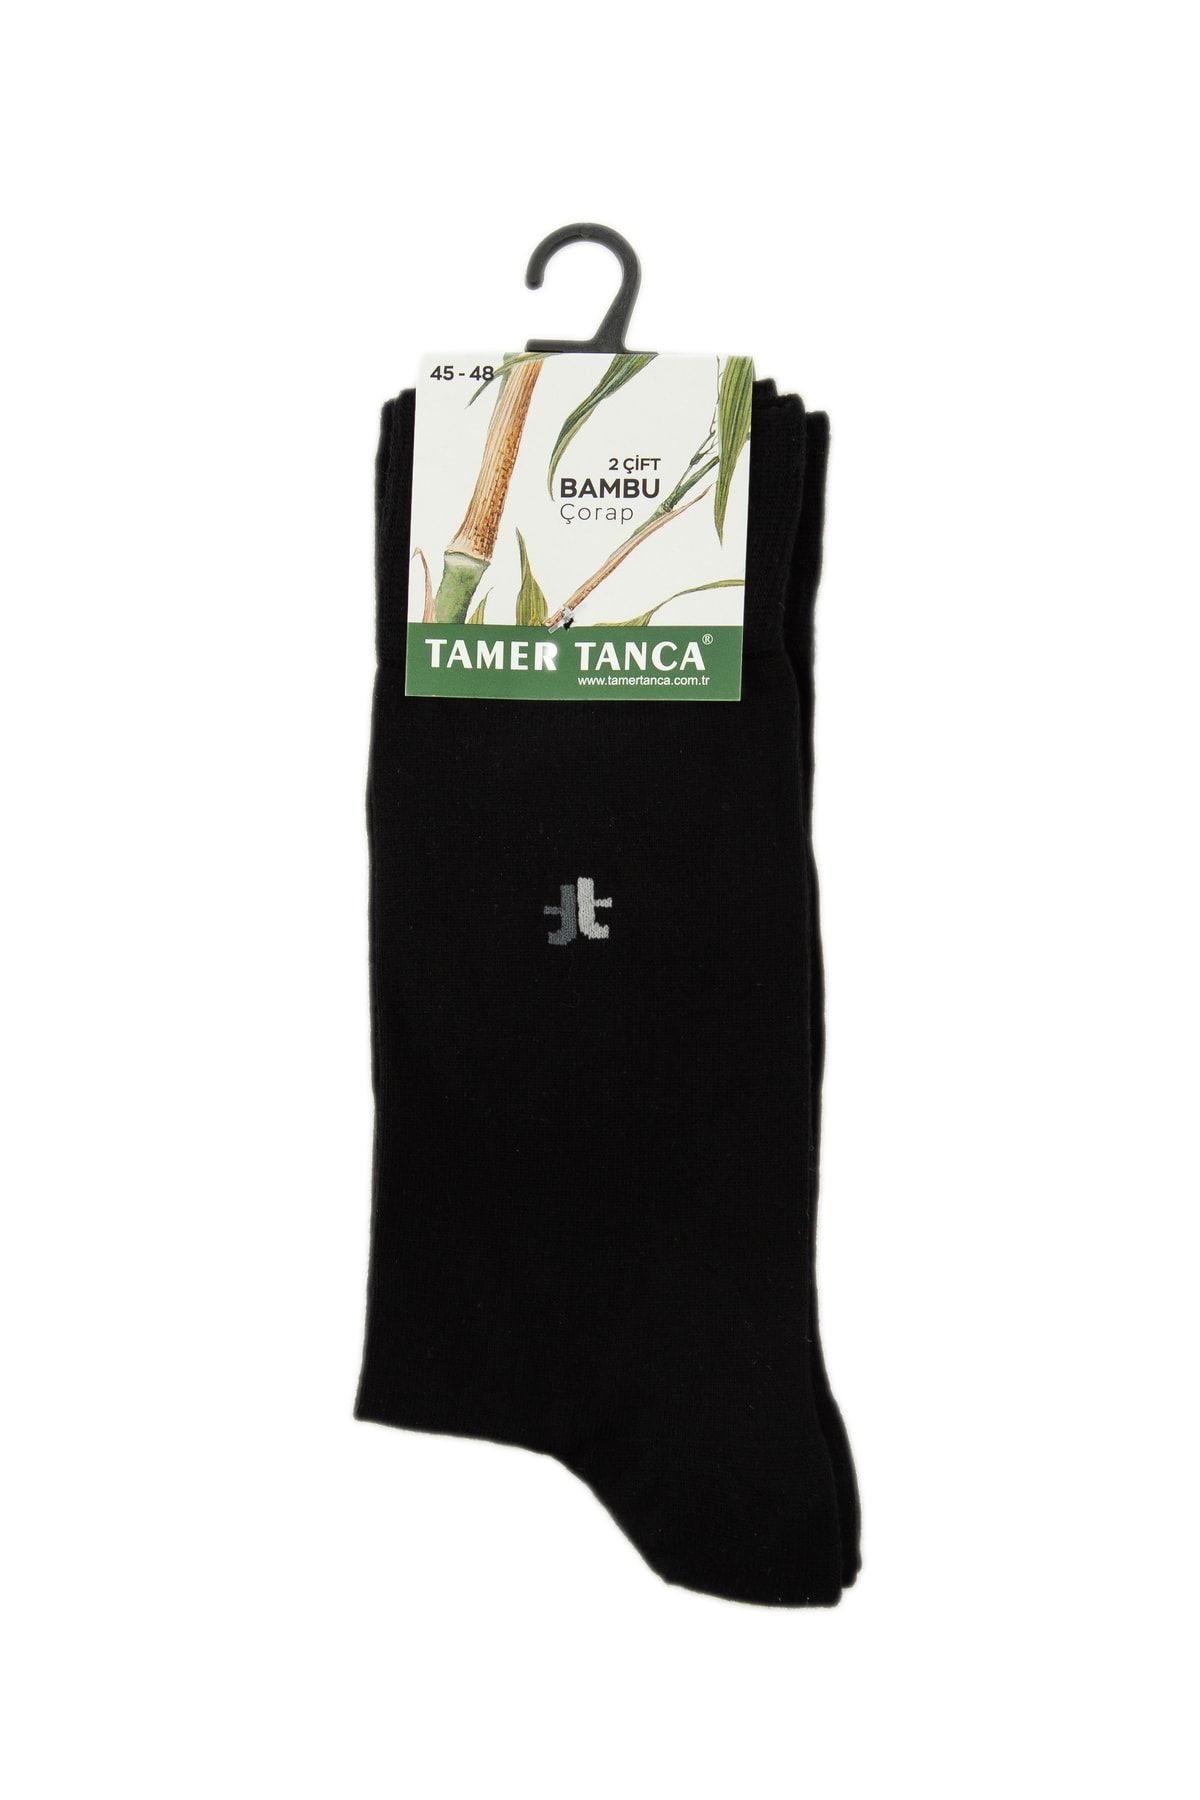 Tamer Tanca Erkek Bambu Çorap Çorap 855 0007 Bmb Crp 45-48 2lı Set